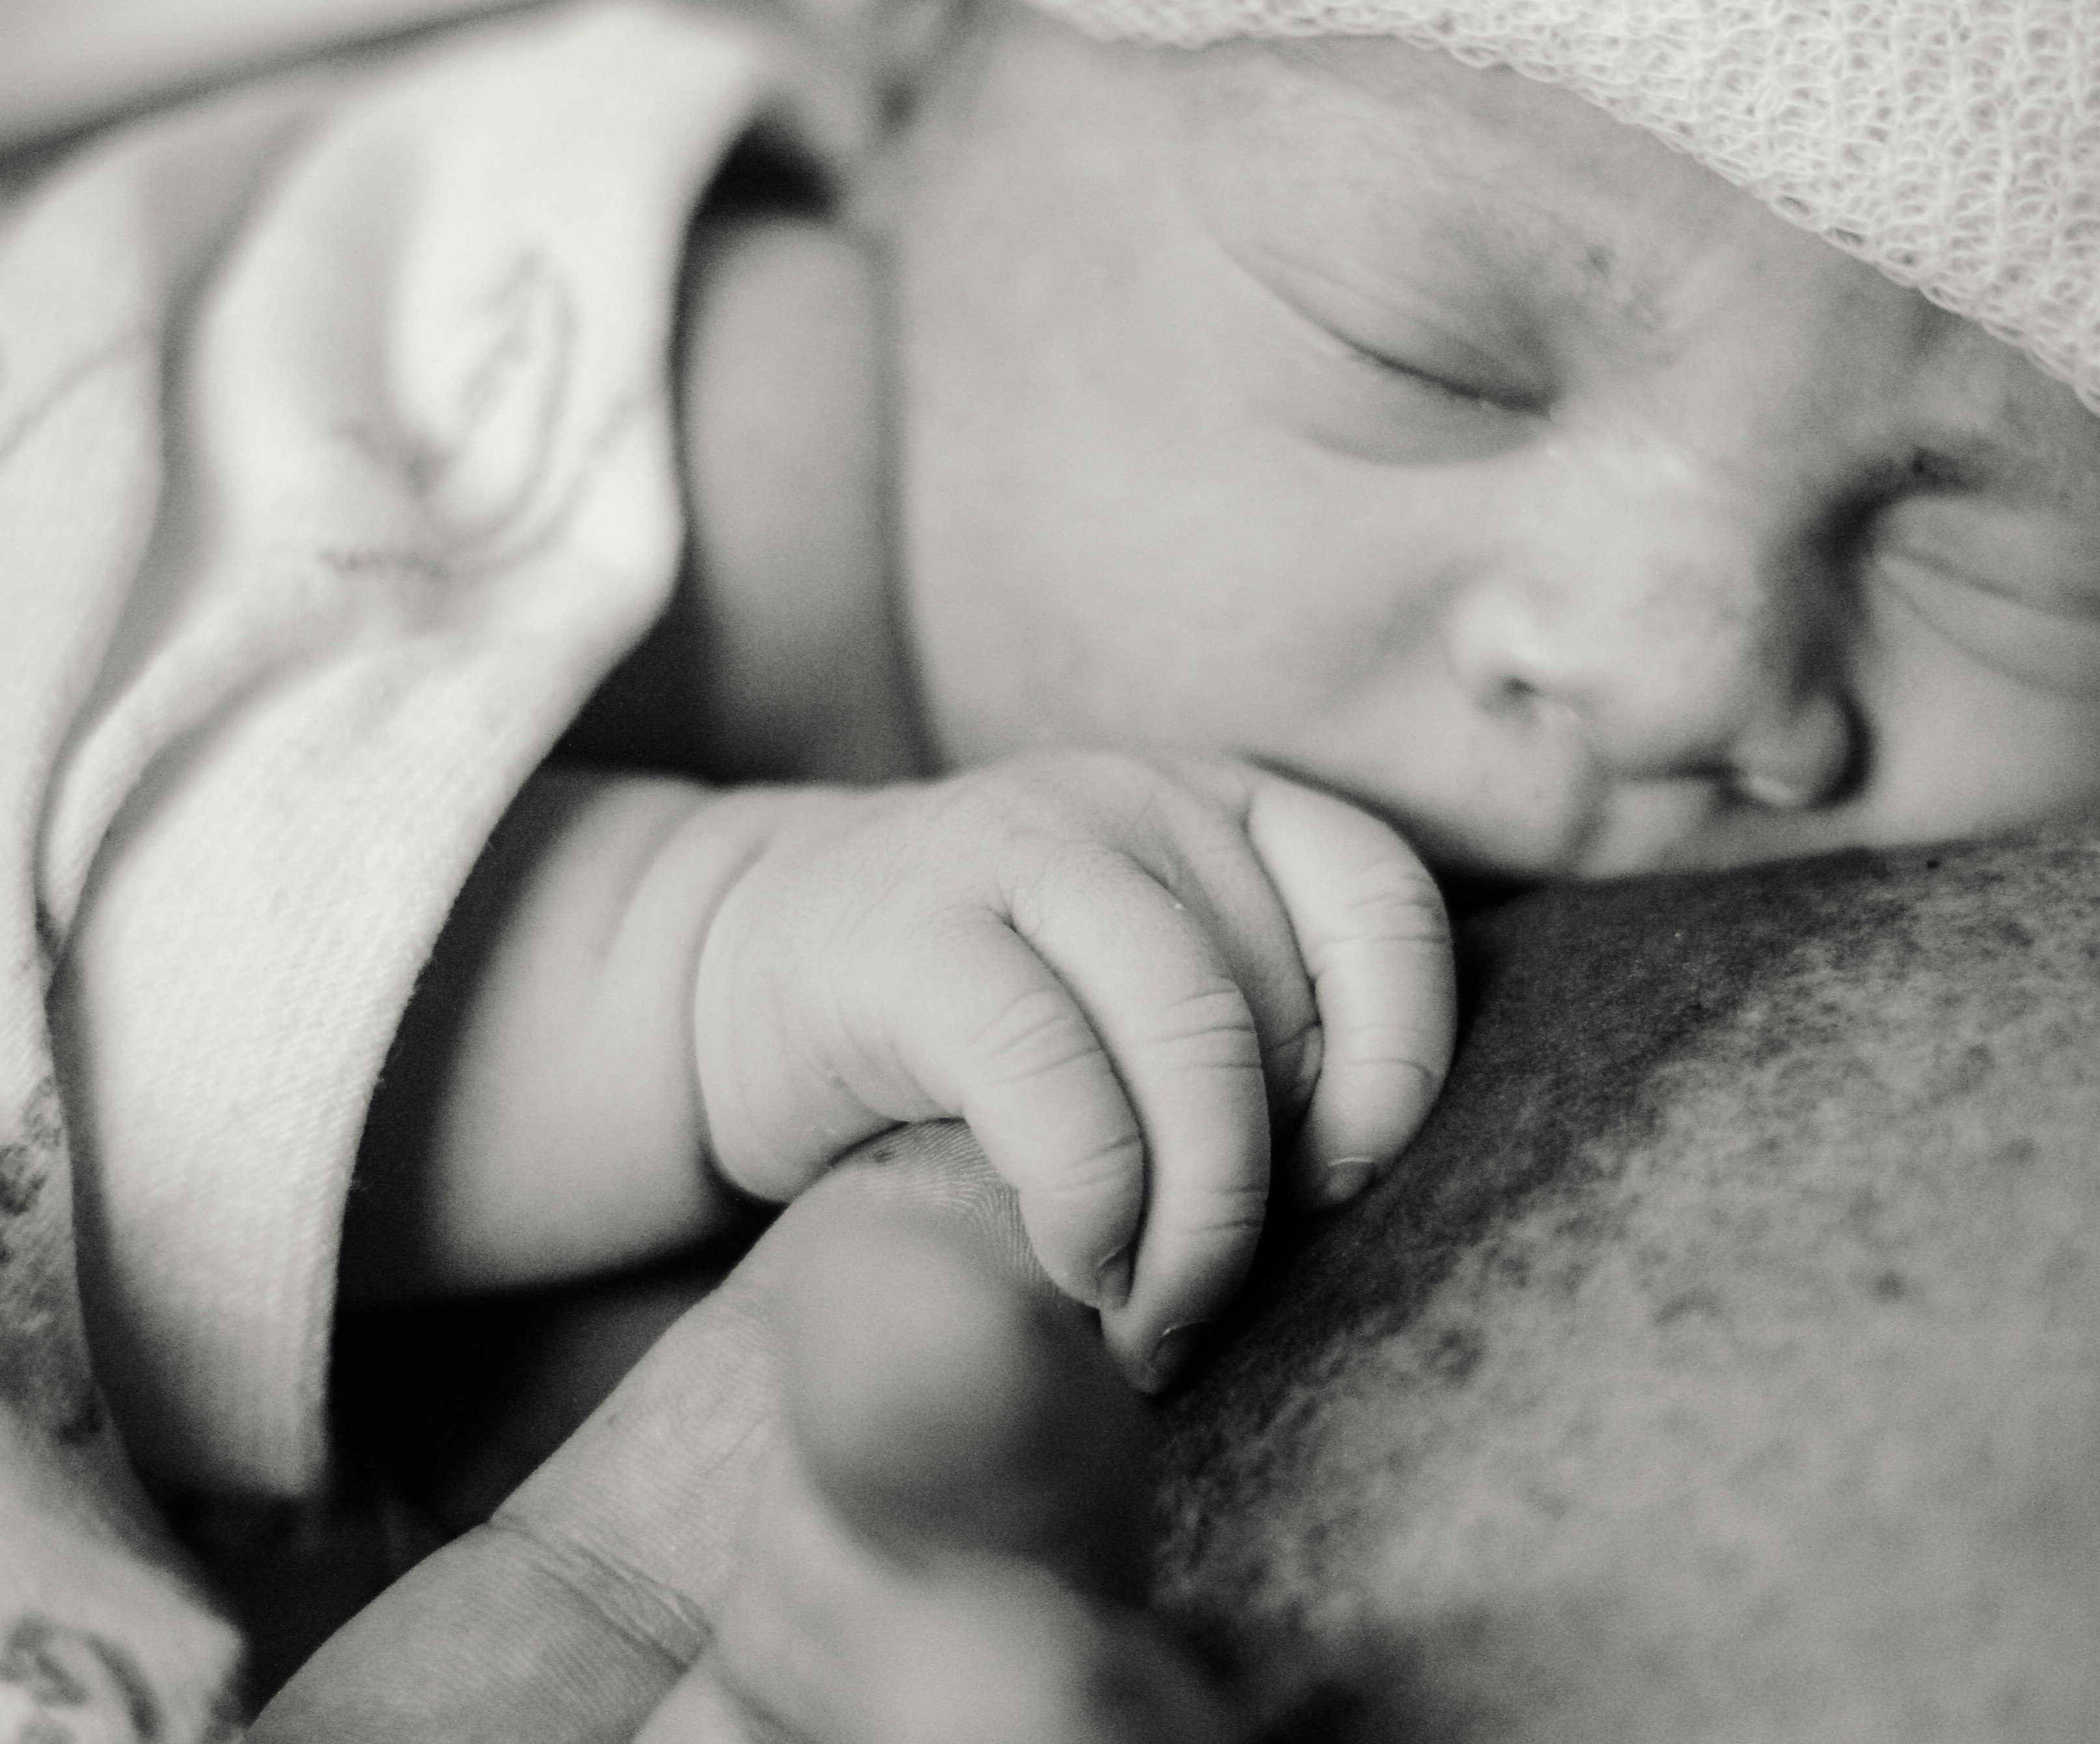 breastfeeding newborn holding parent's finger